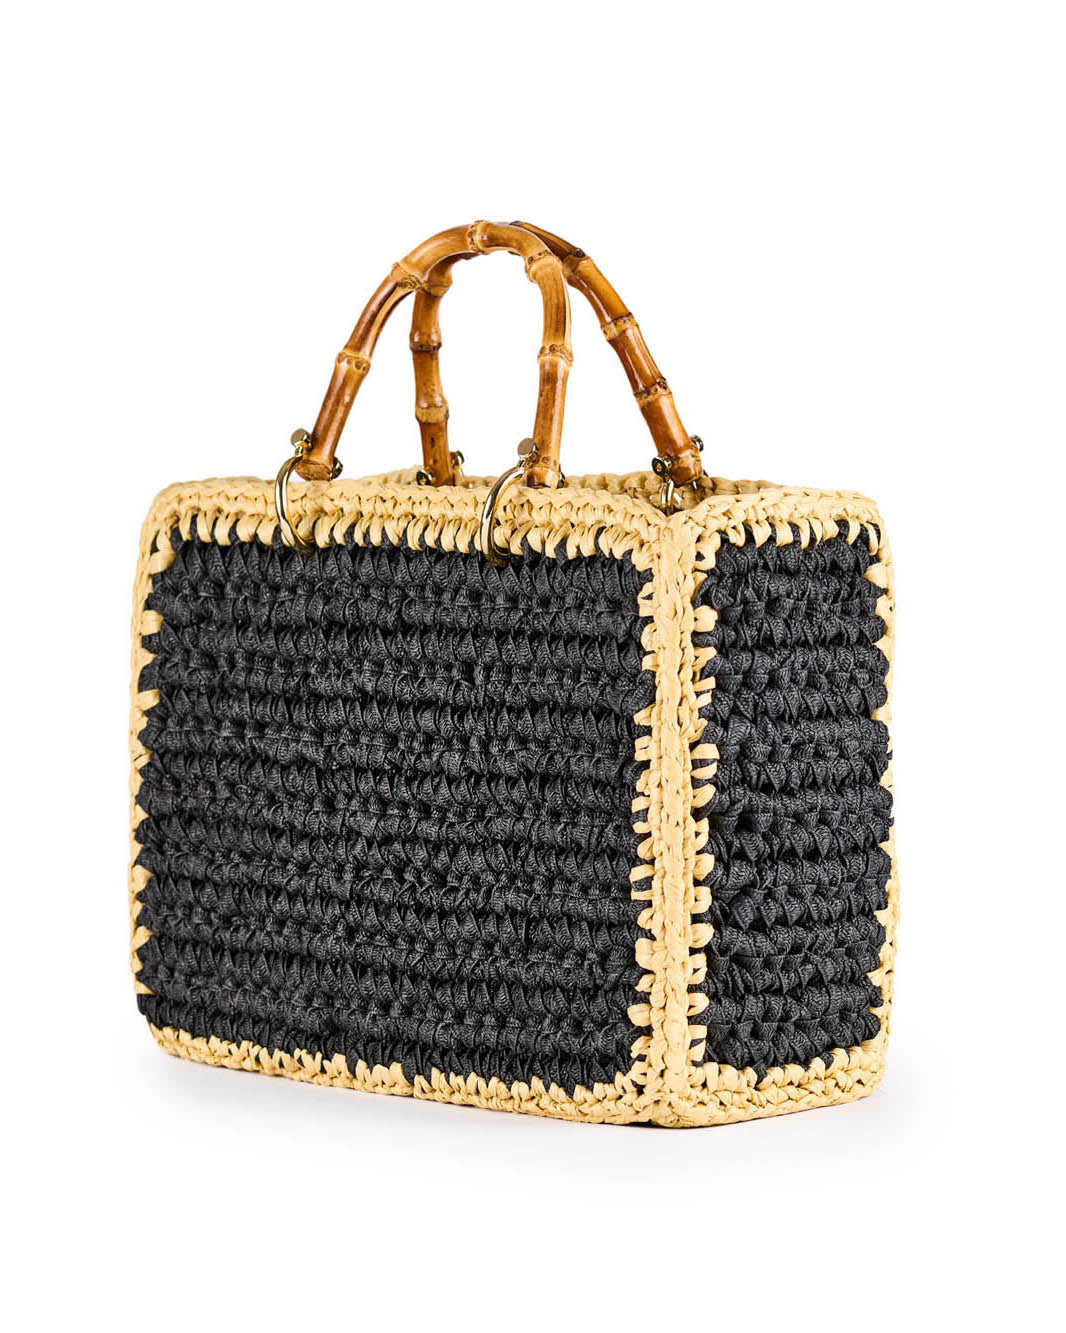 Handwoven straw and black woven handbag with bamboo handles